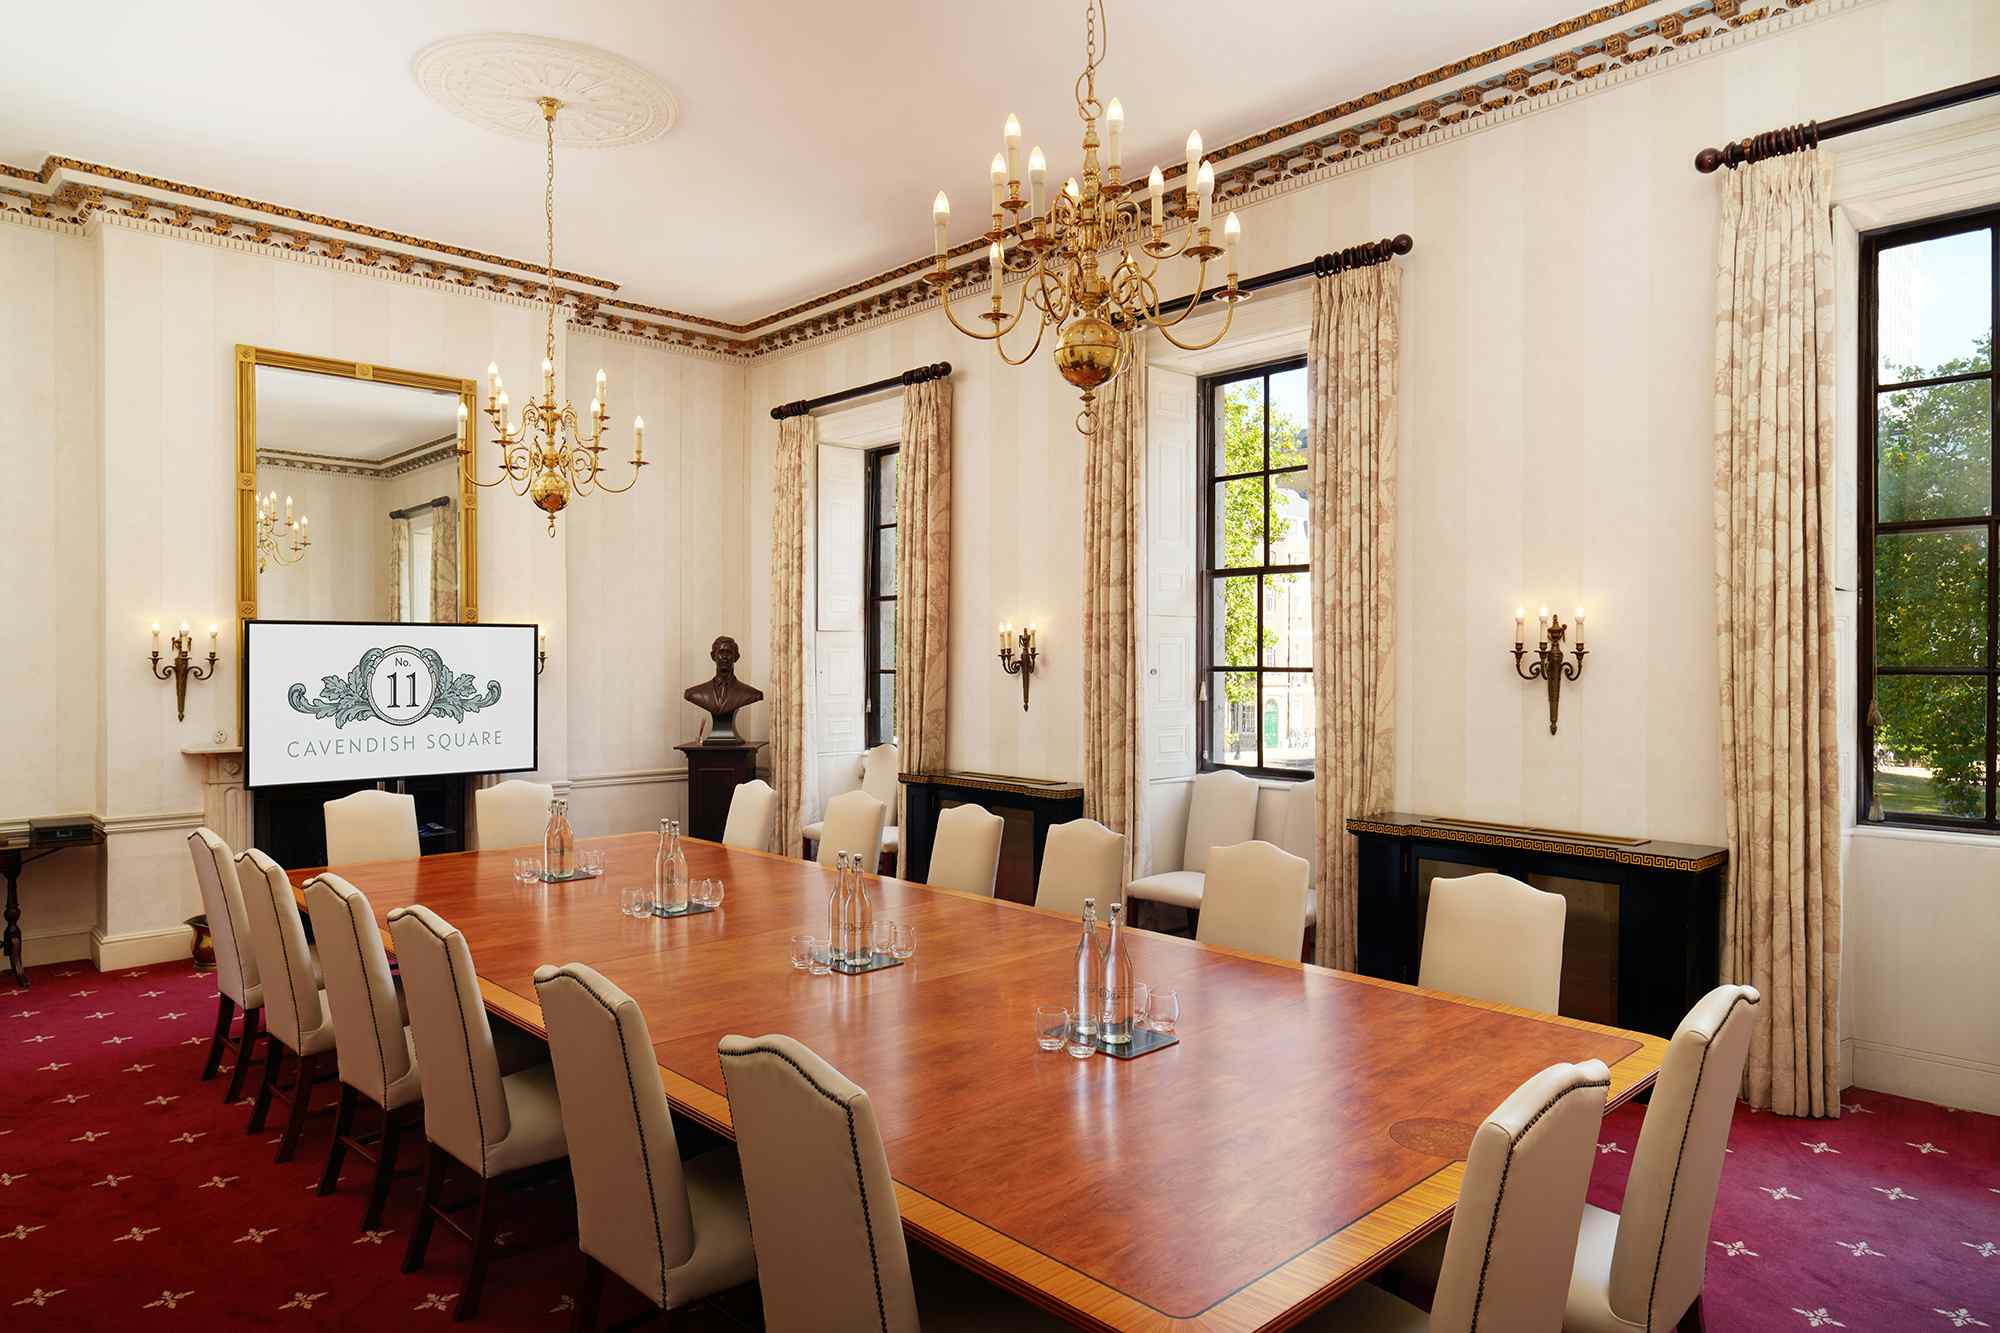 Presidents Room, No.11 Cavendish Square